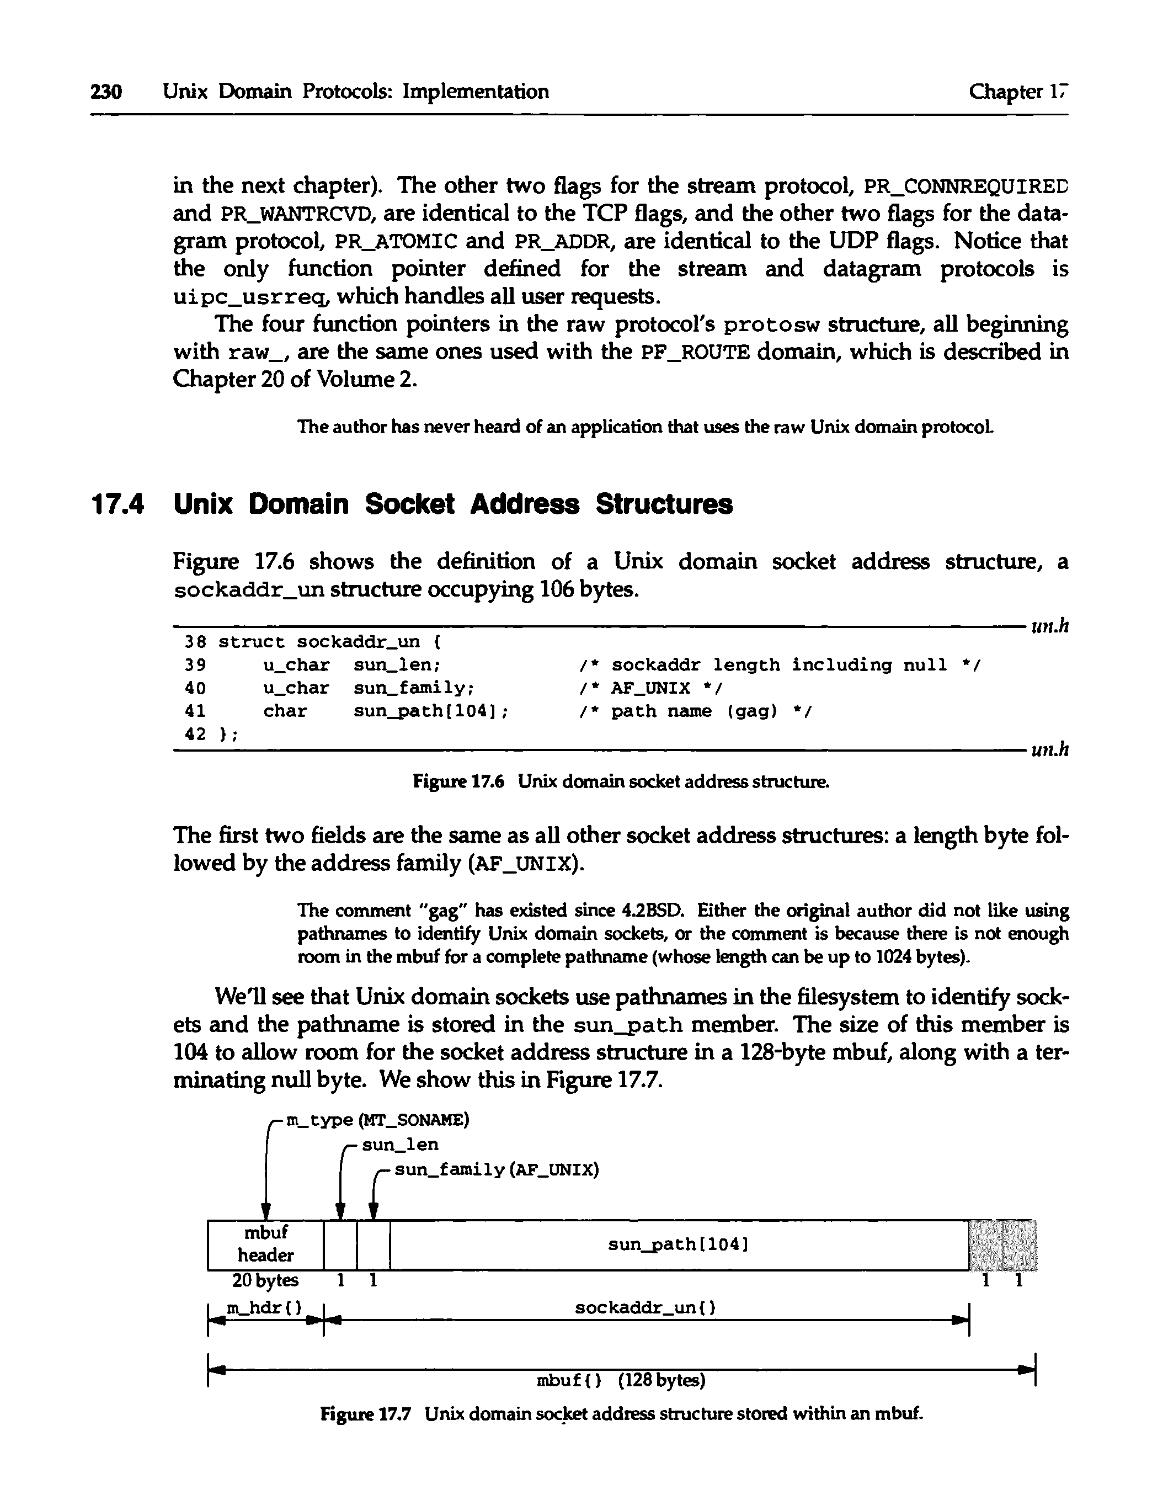 17.4 Unix Domain Socket Address Structures